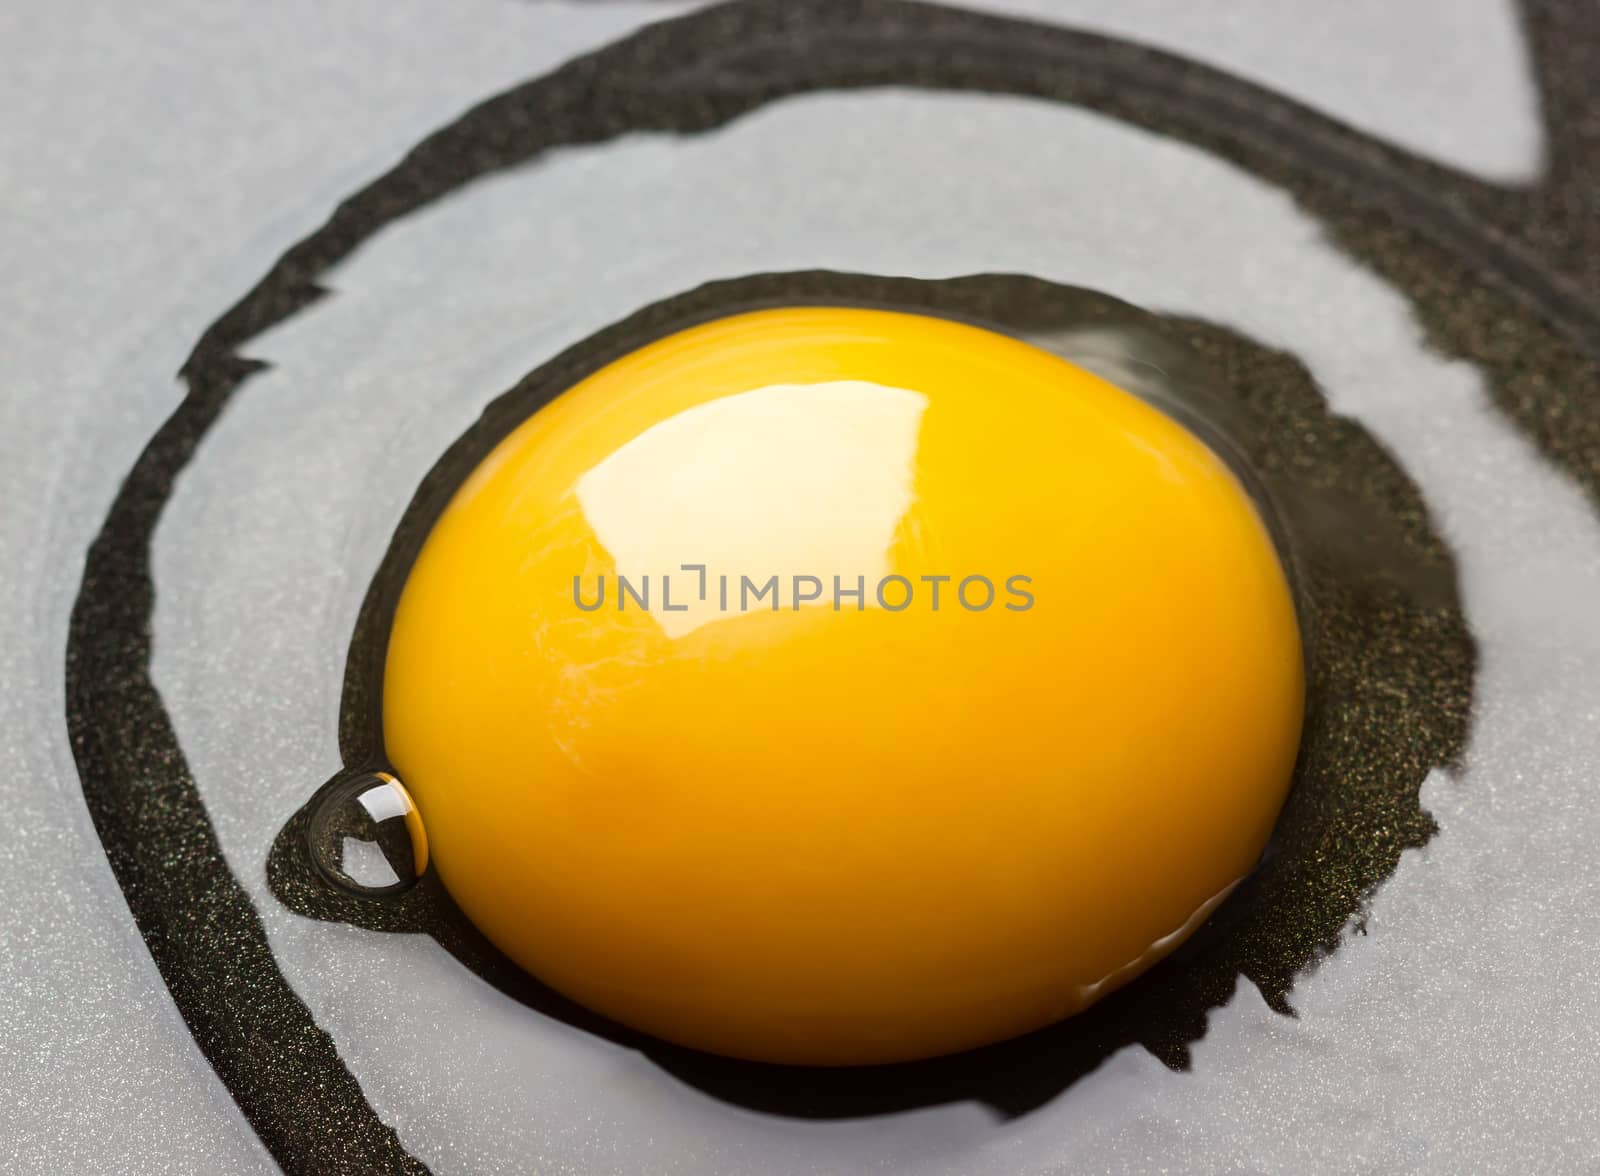 Raw egg on frying pan